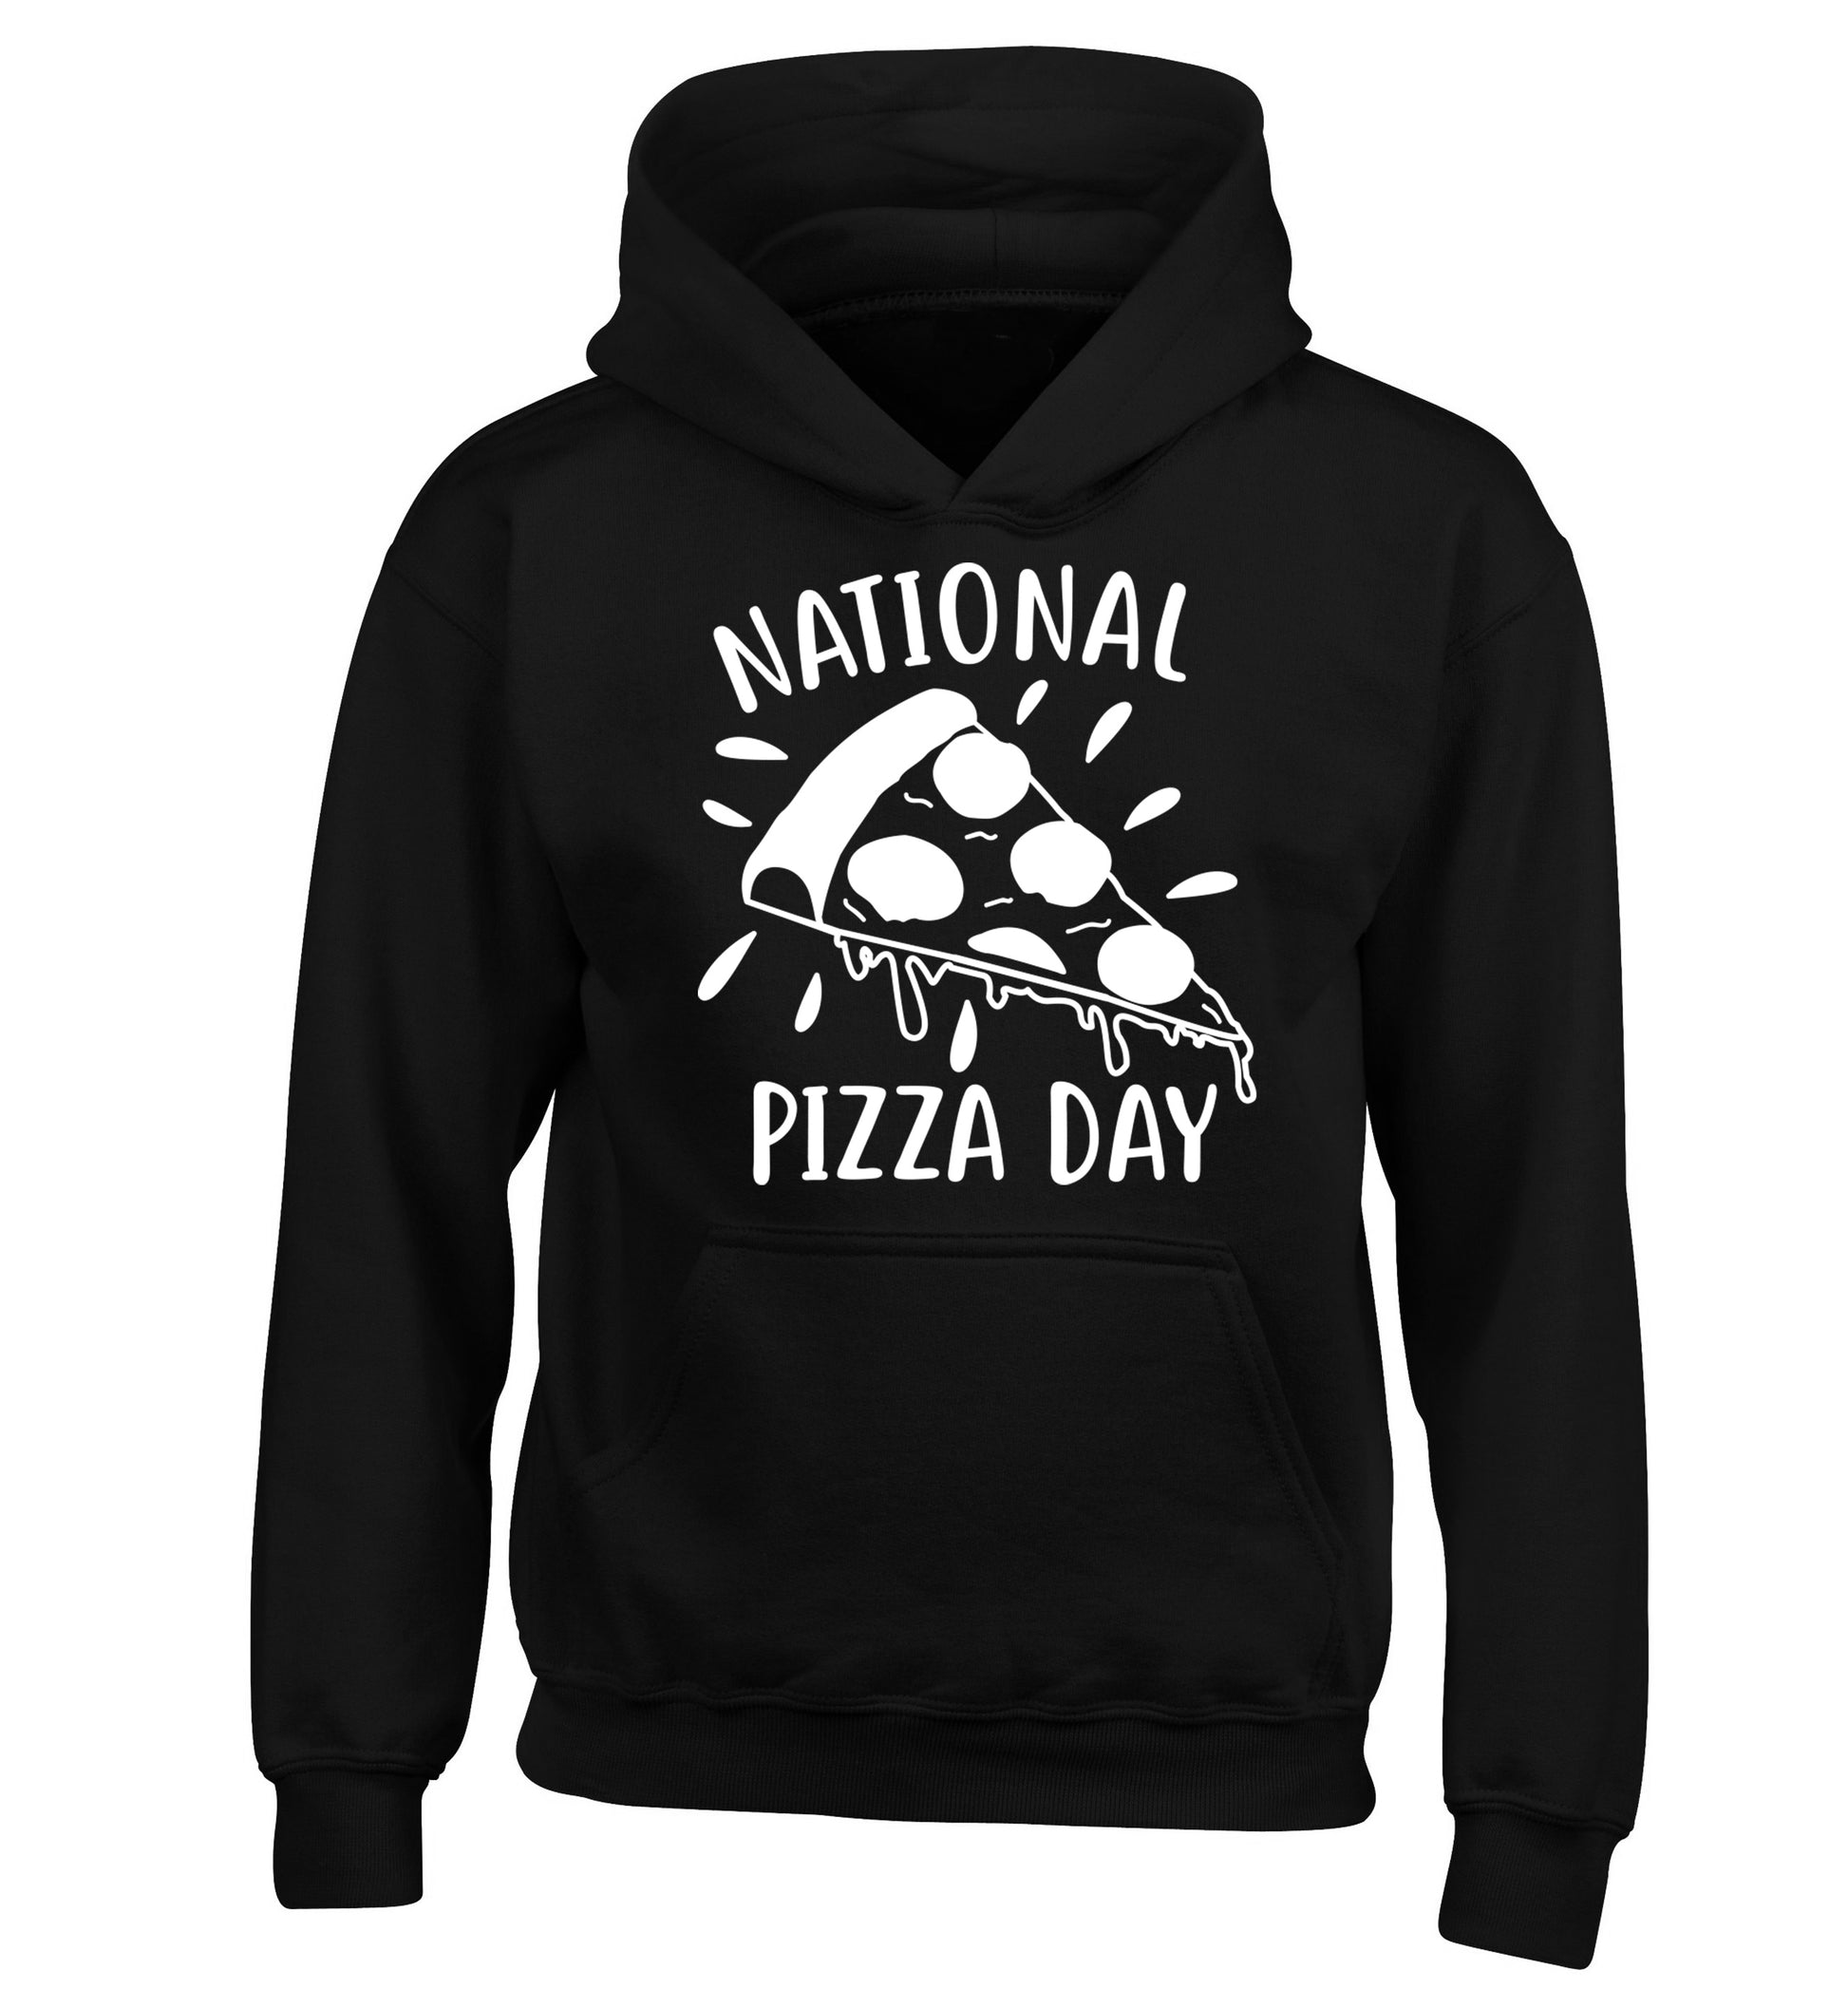 National pizza day children's black hoodie 12-13 Years